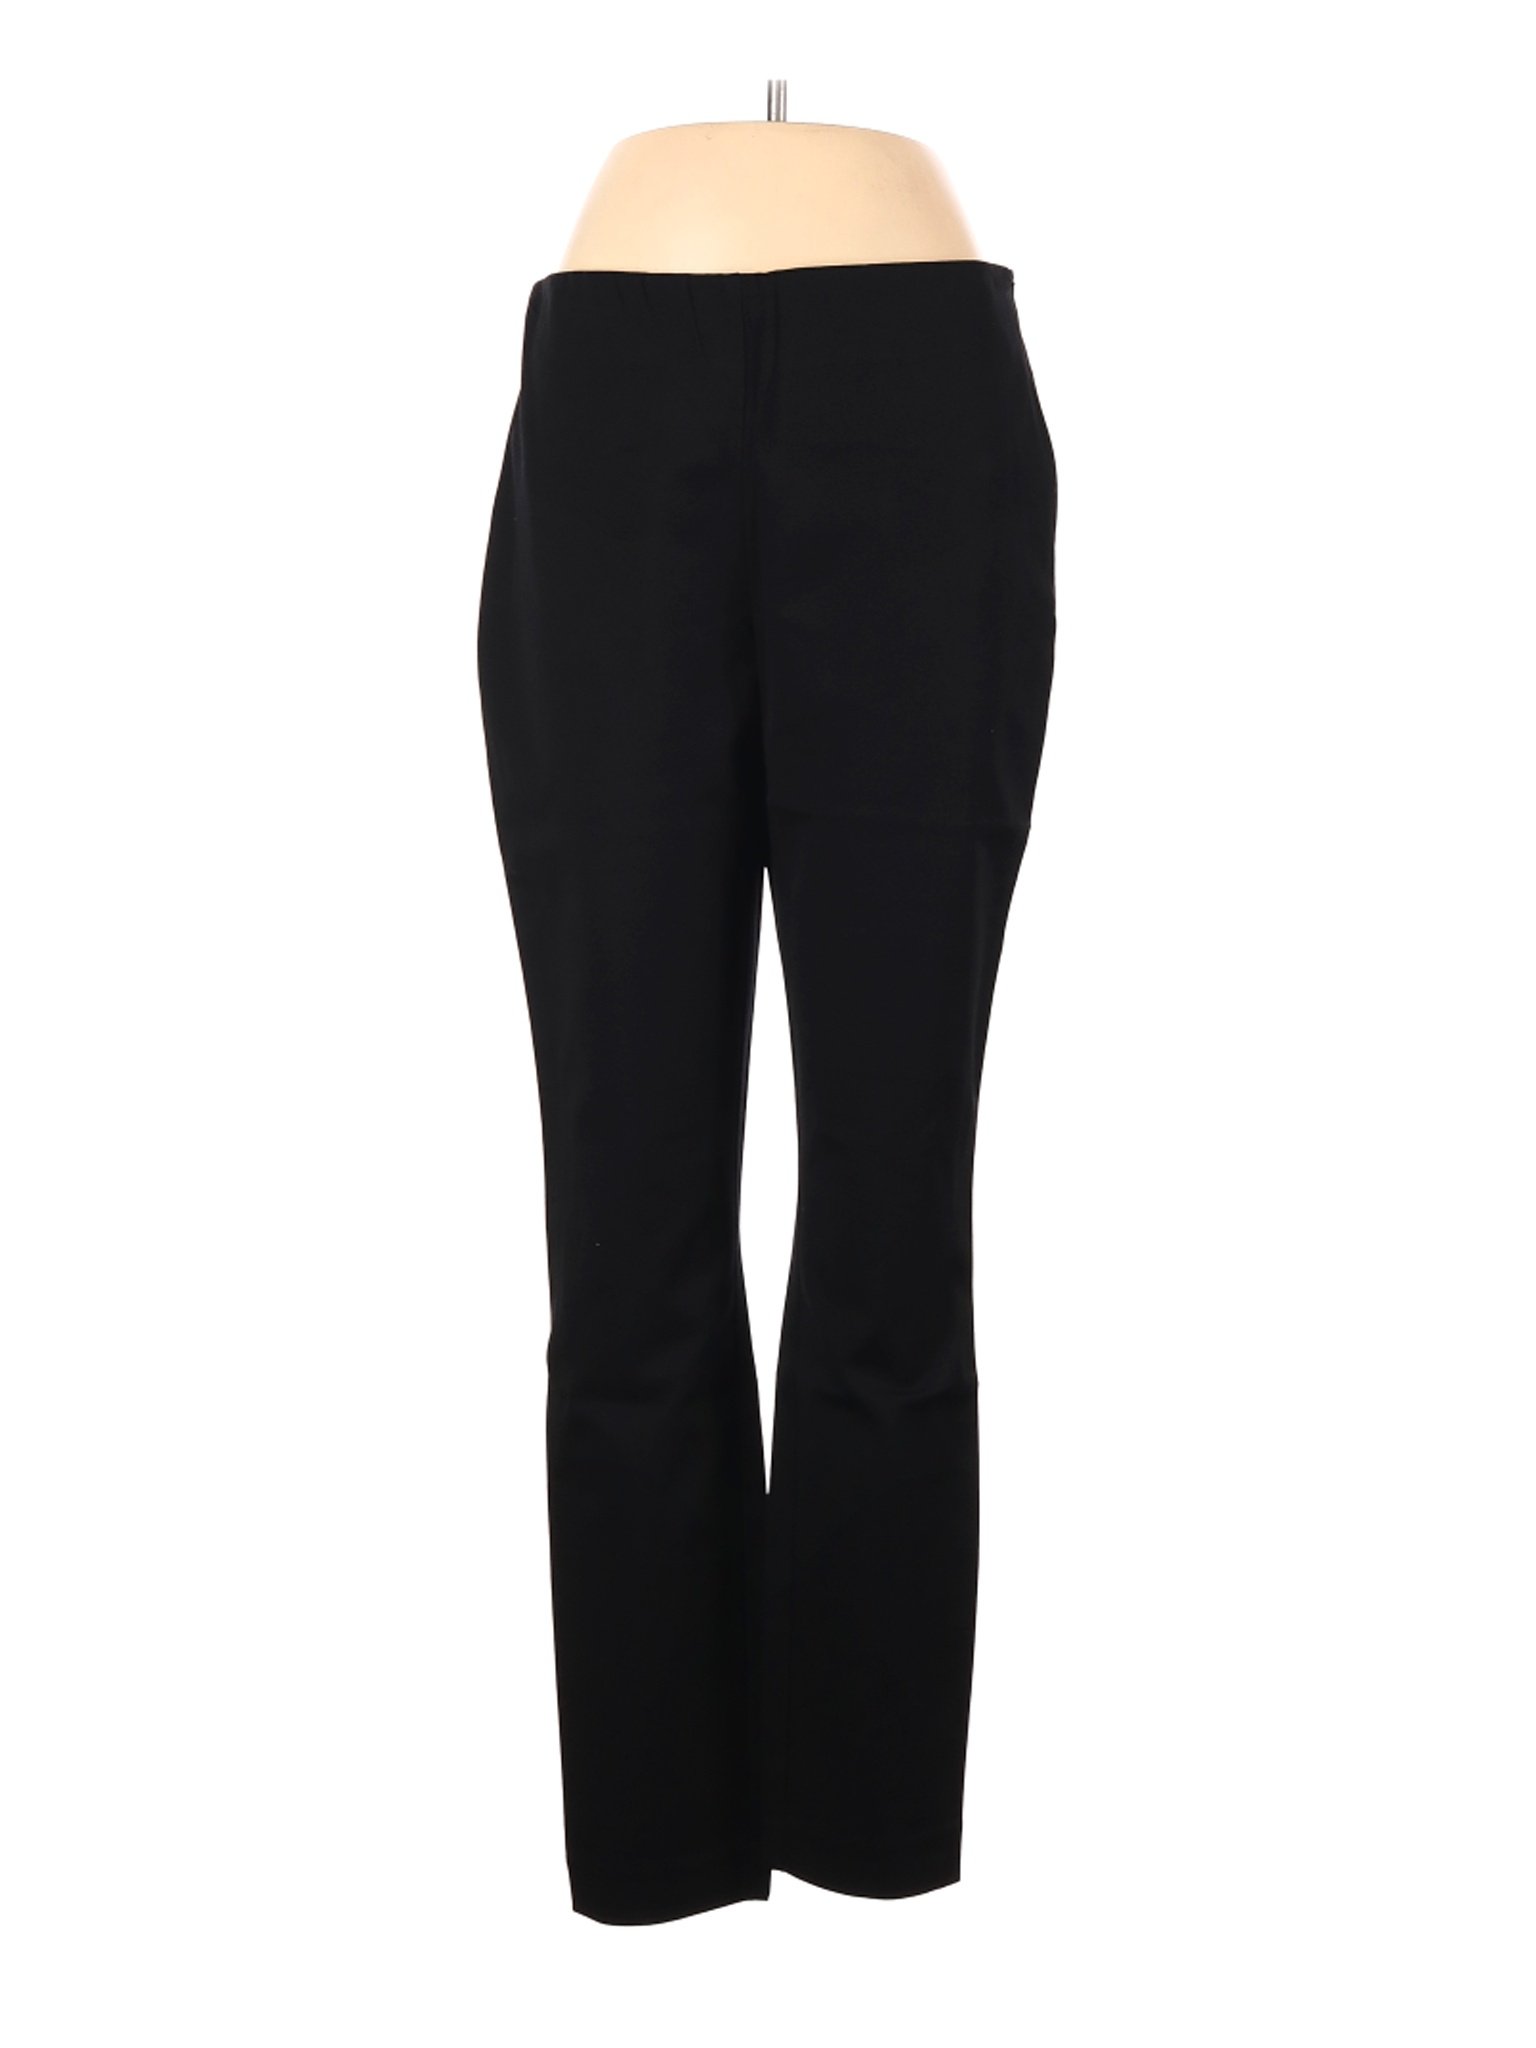 CAbi Women Black Casual Pants 8 | eBay